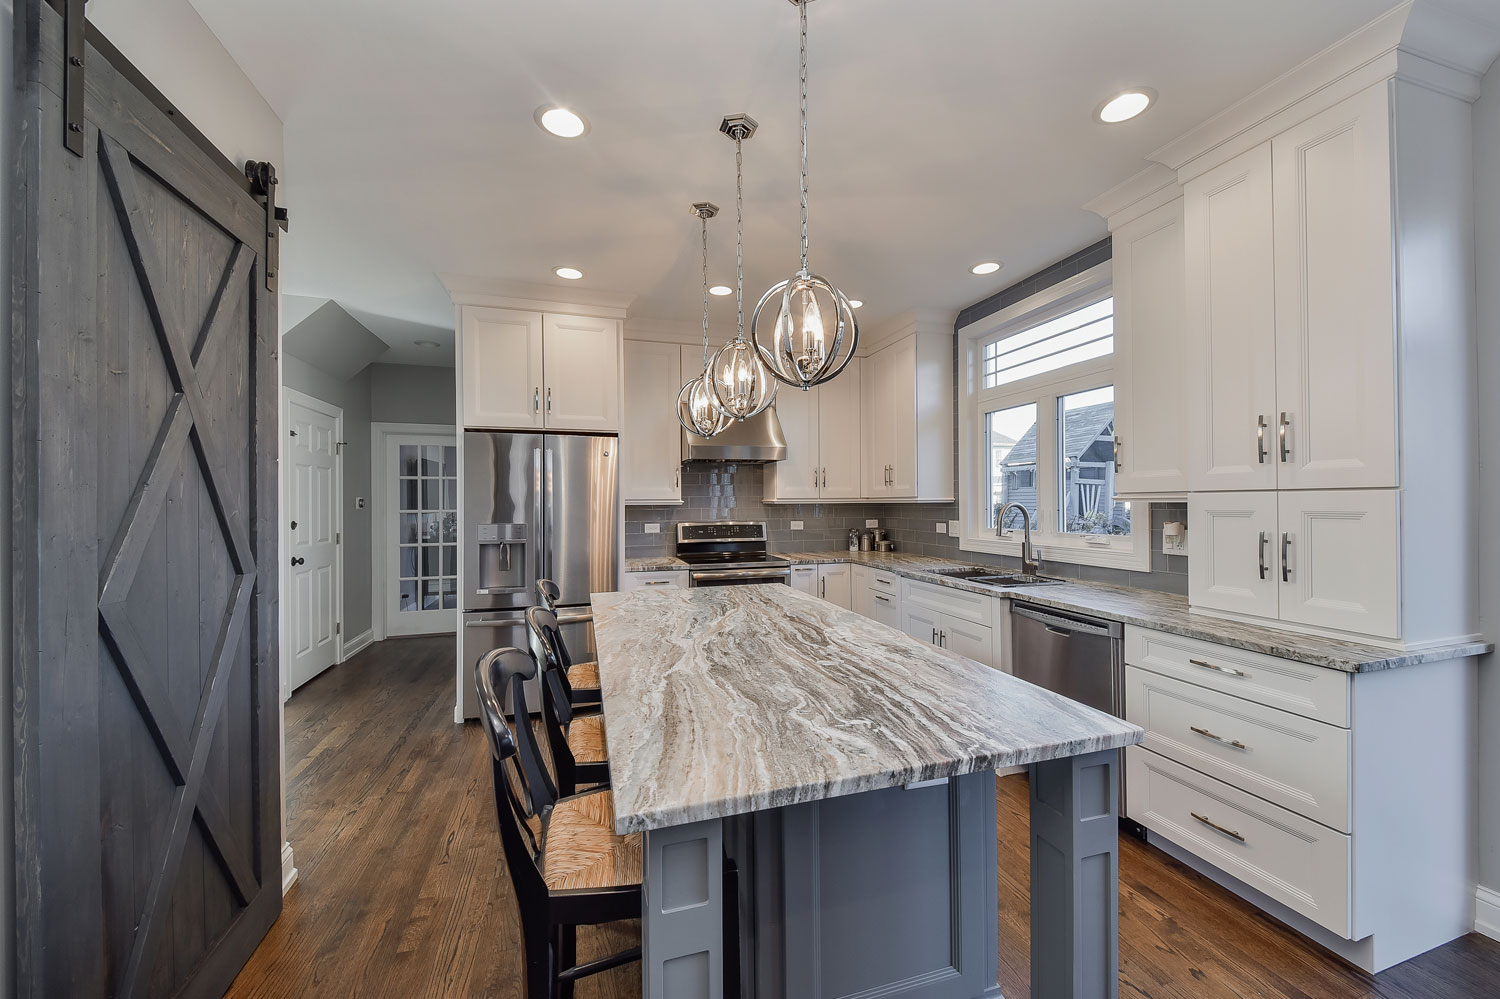 's Naperville Kitchen Remodel Pictures, Featuring White Quartz Countertops - Sebring Design Build